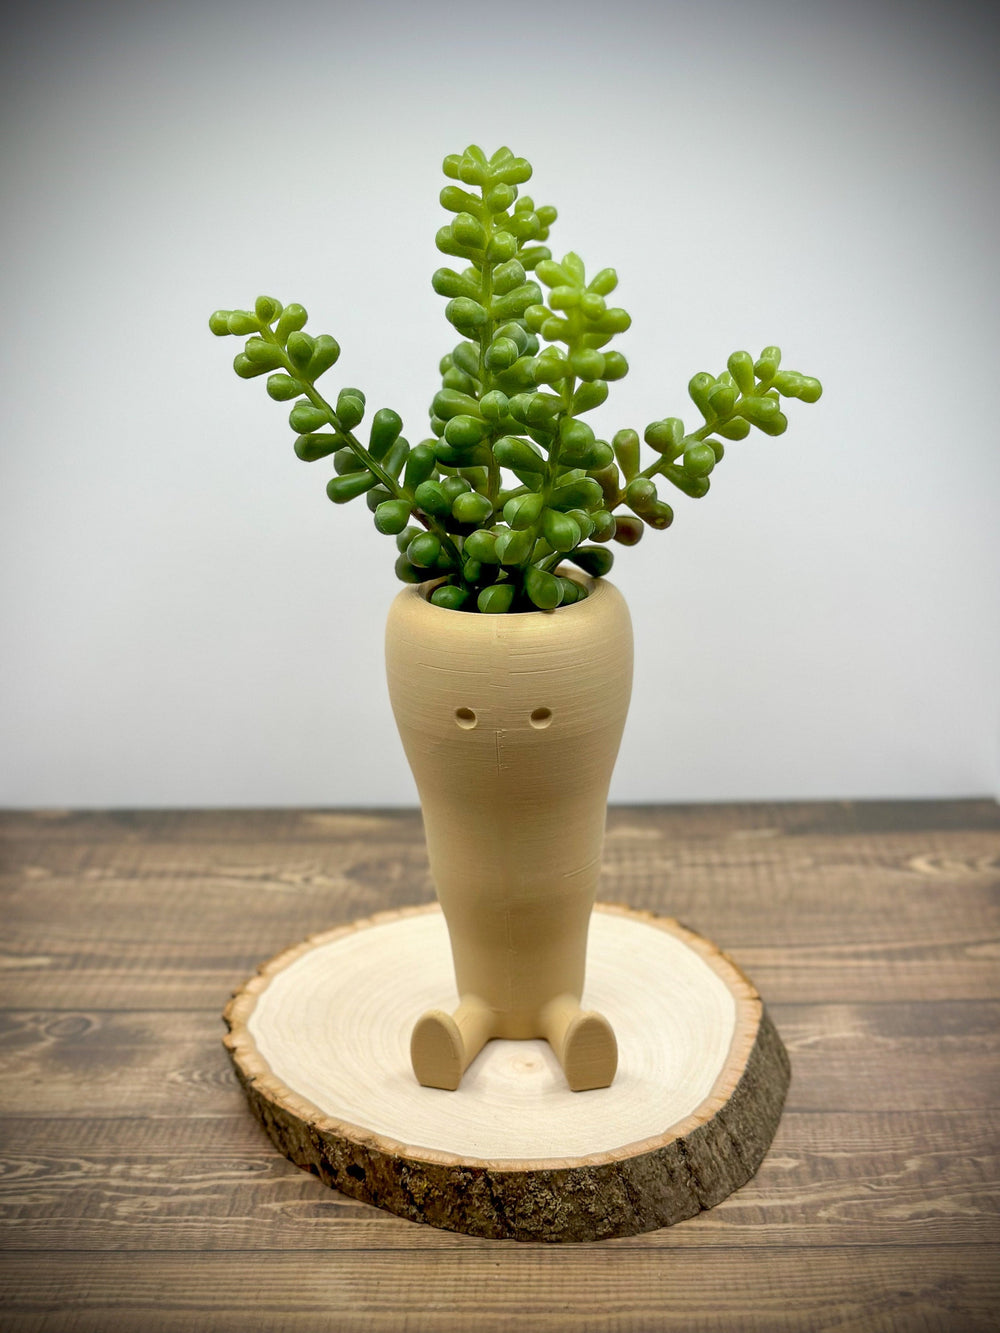 
  
  Carrot Succulent & Cactus Planter Pot
  
